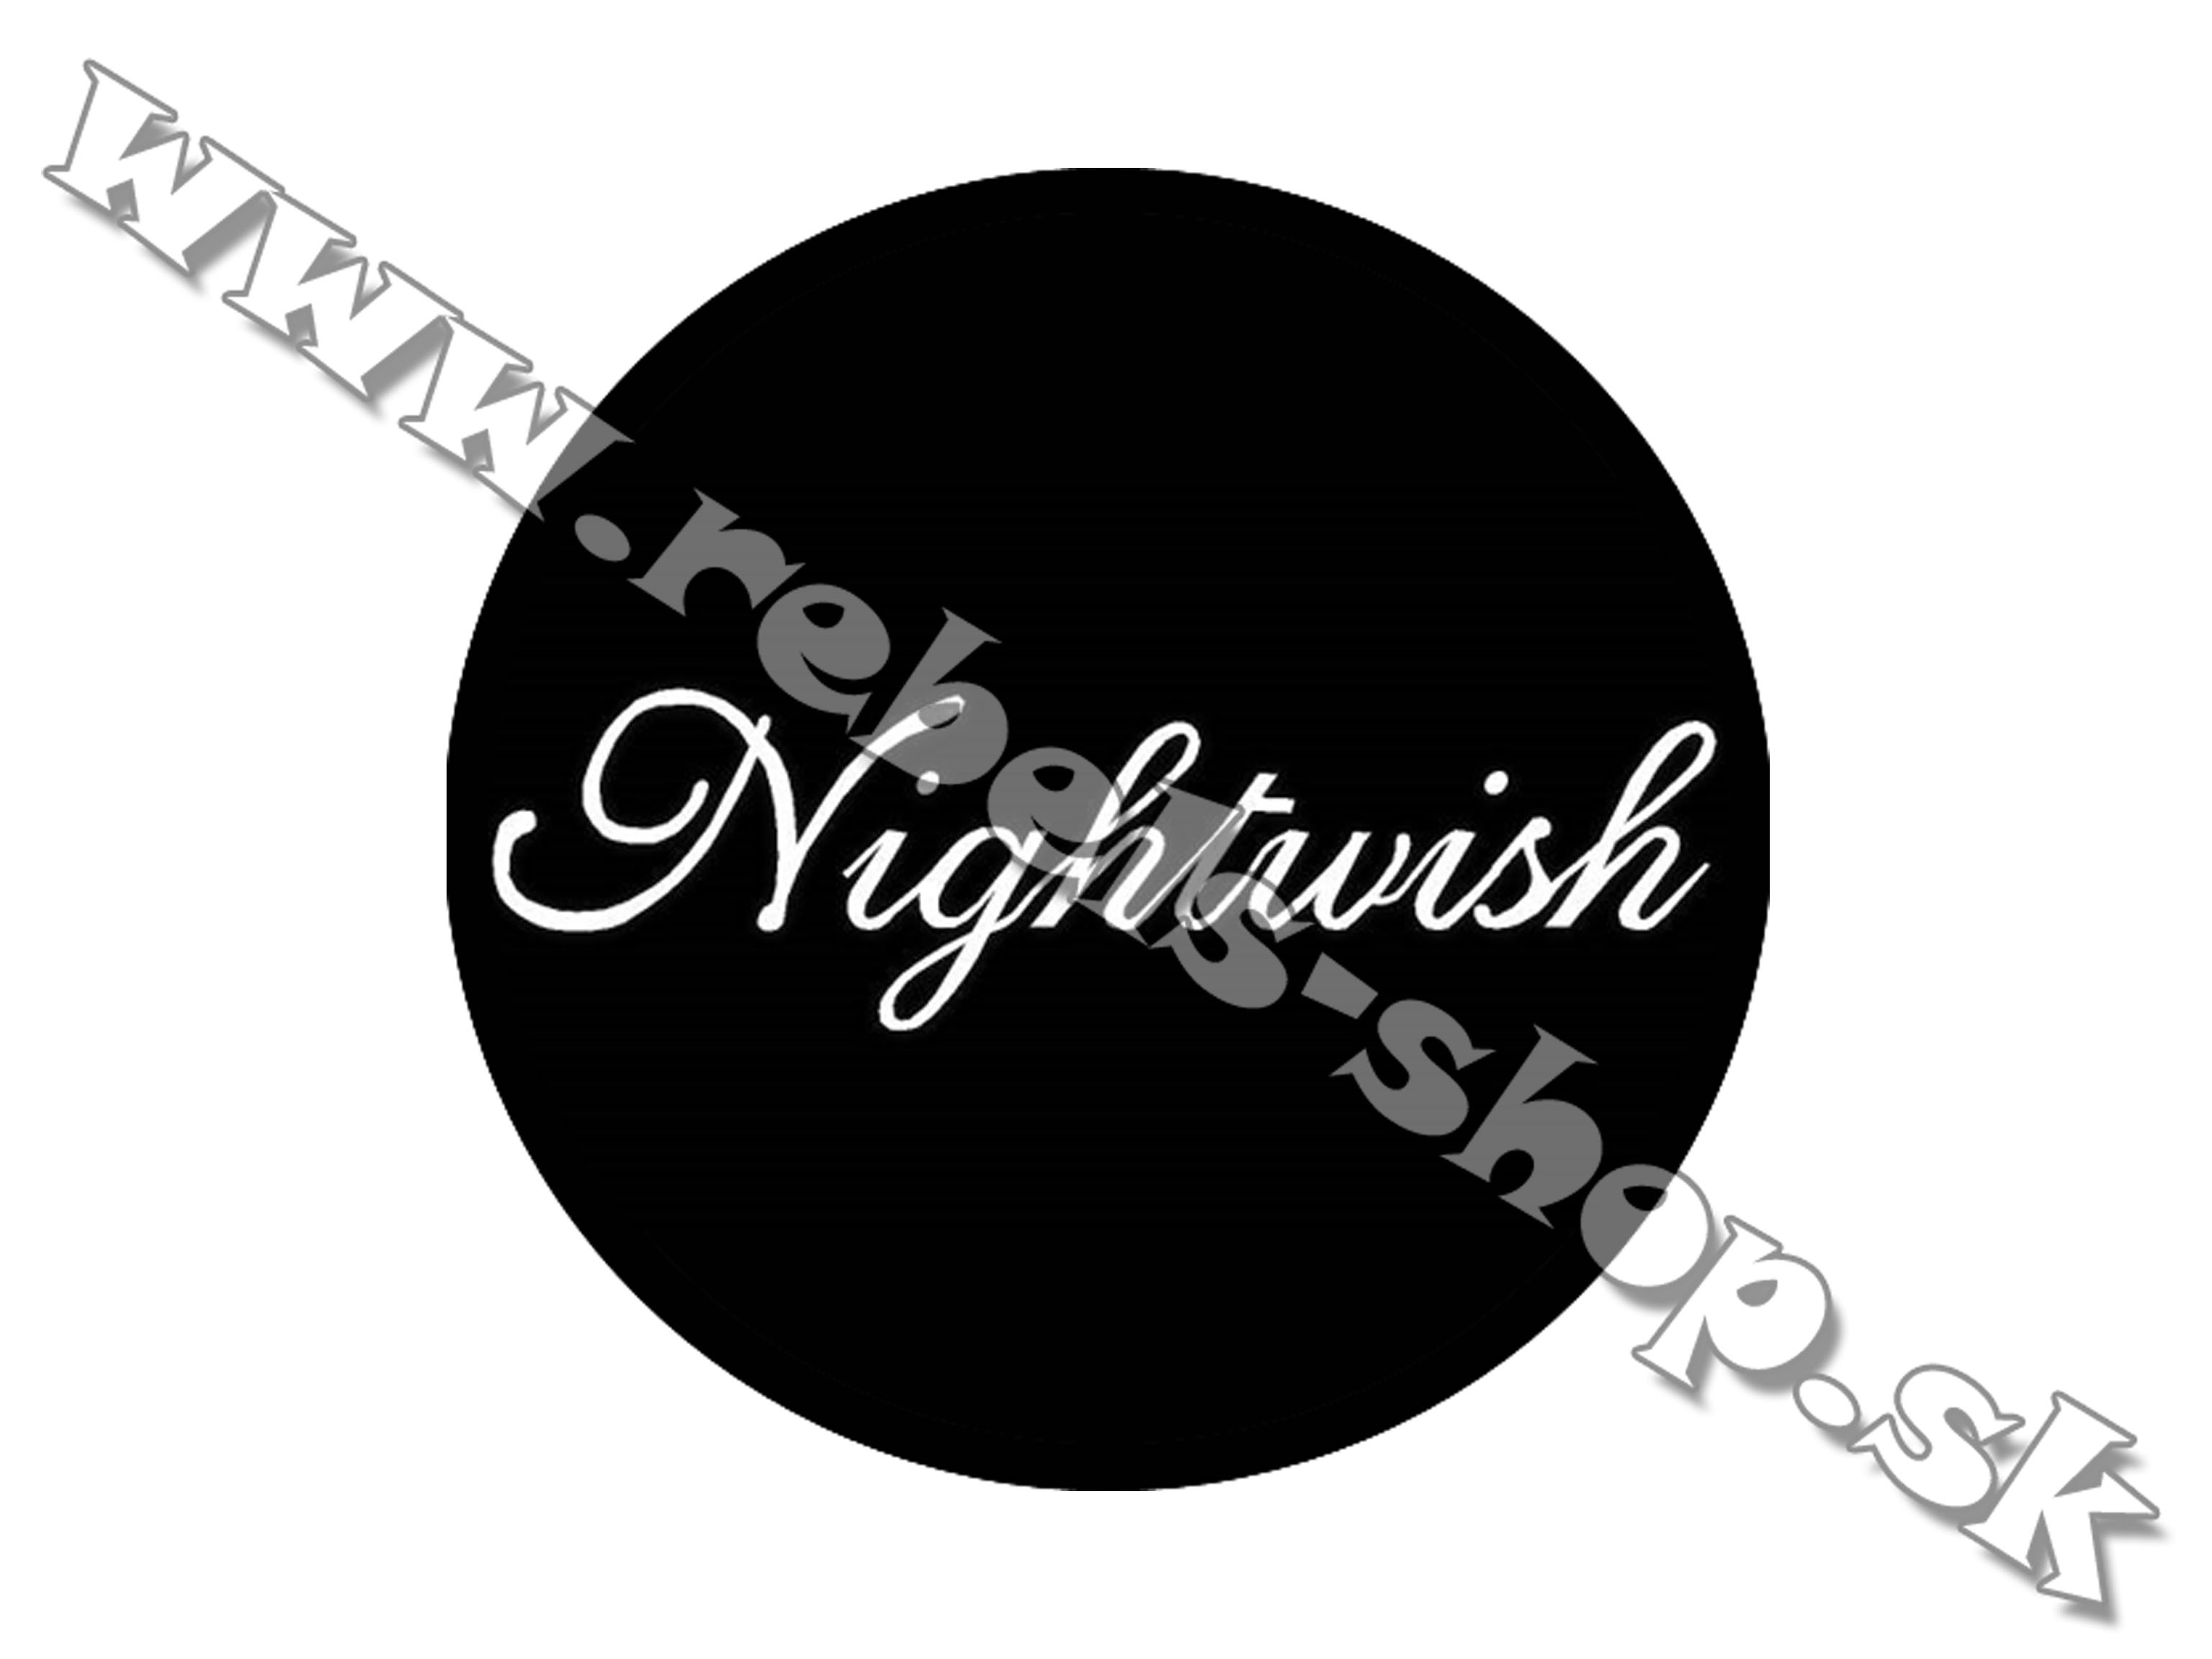 Odznak "Nightwish"